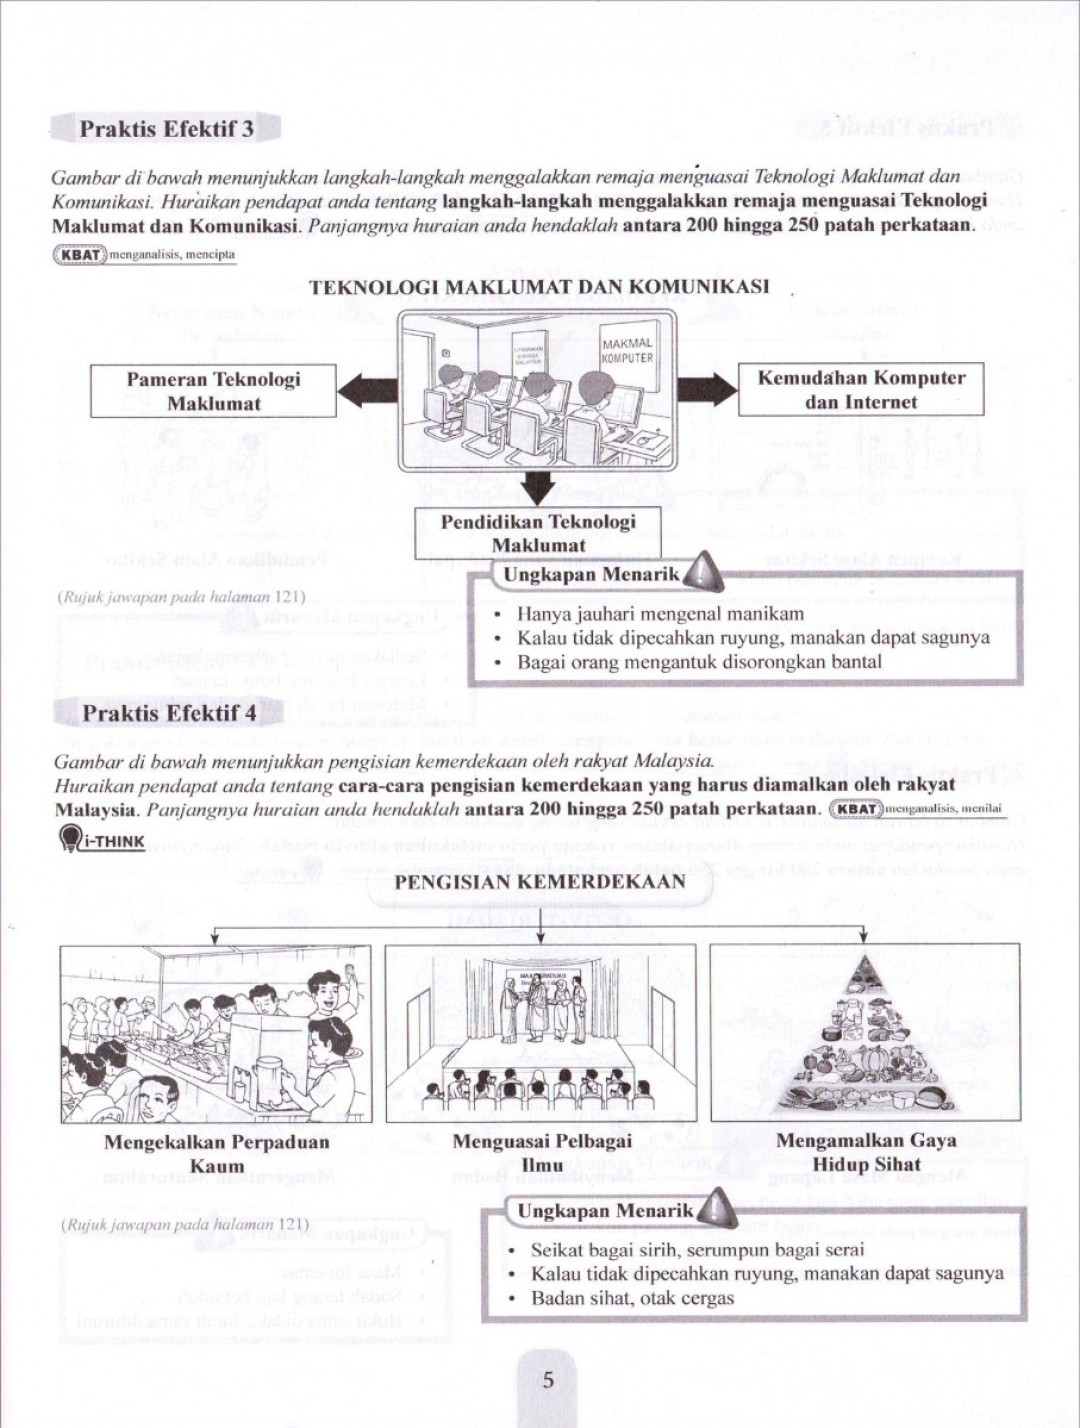 Modul Efektif Pdpc Bahasa Melayu Tingkatan 4